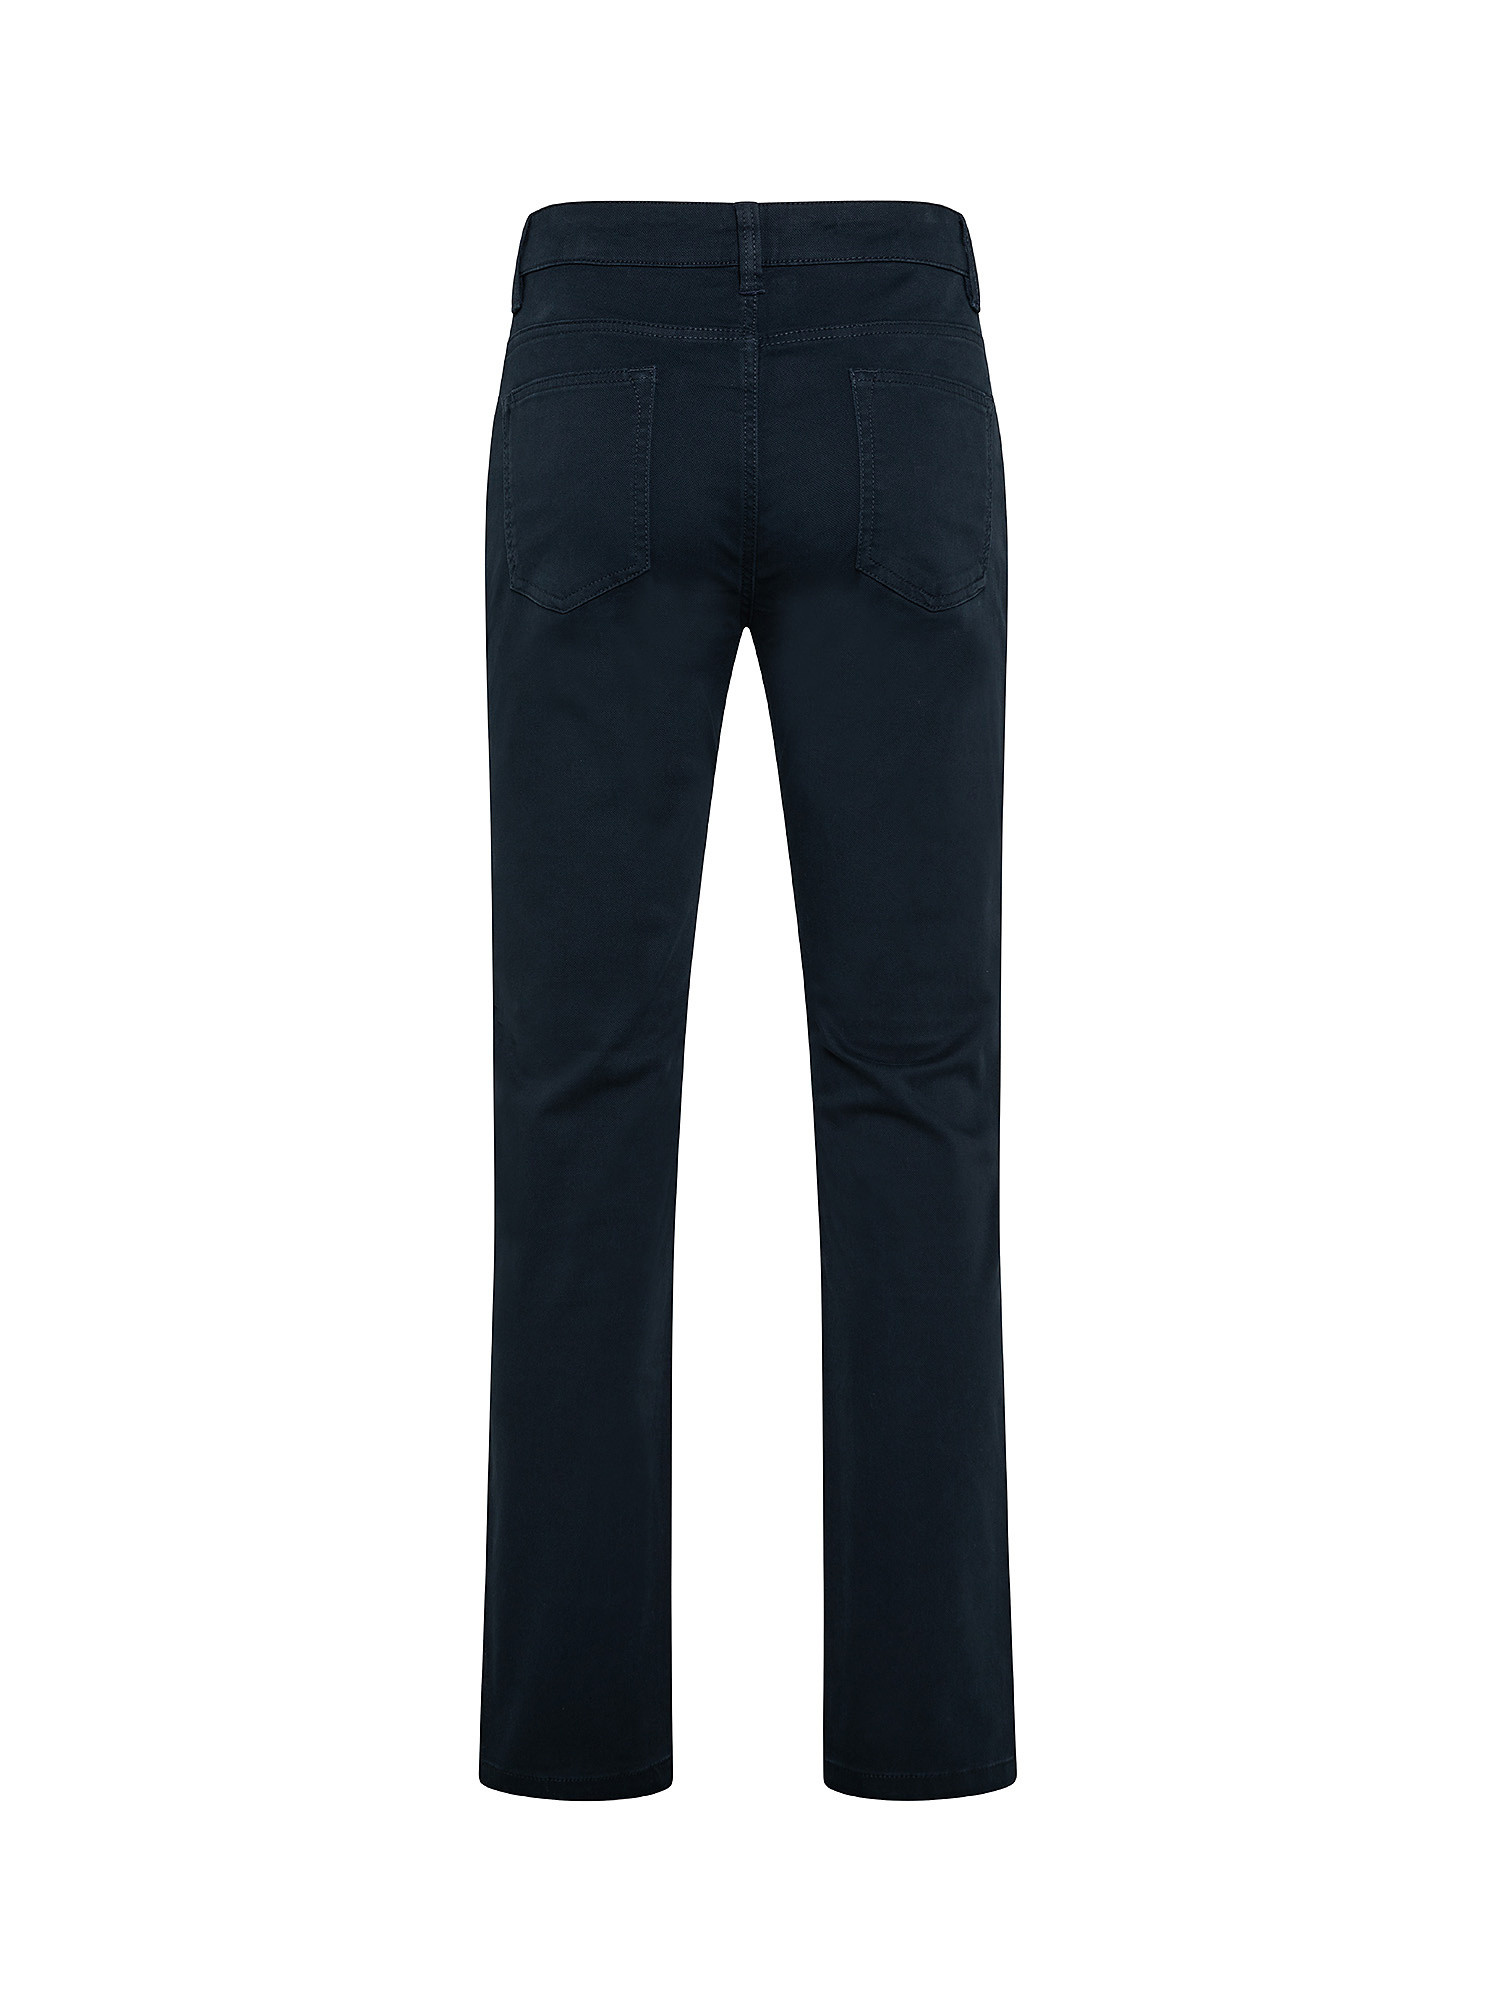 Pantalone cinque tasche slim comfort fit in cotone elasticizzato, Blu scuro, large image number 1